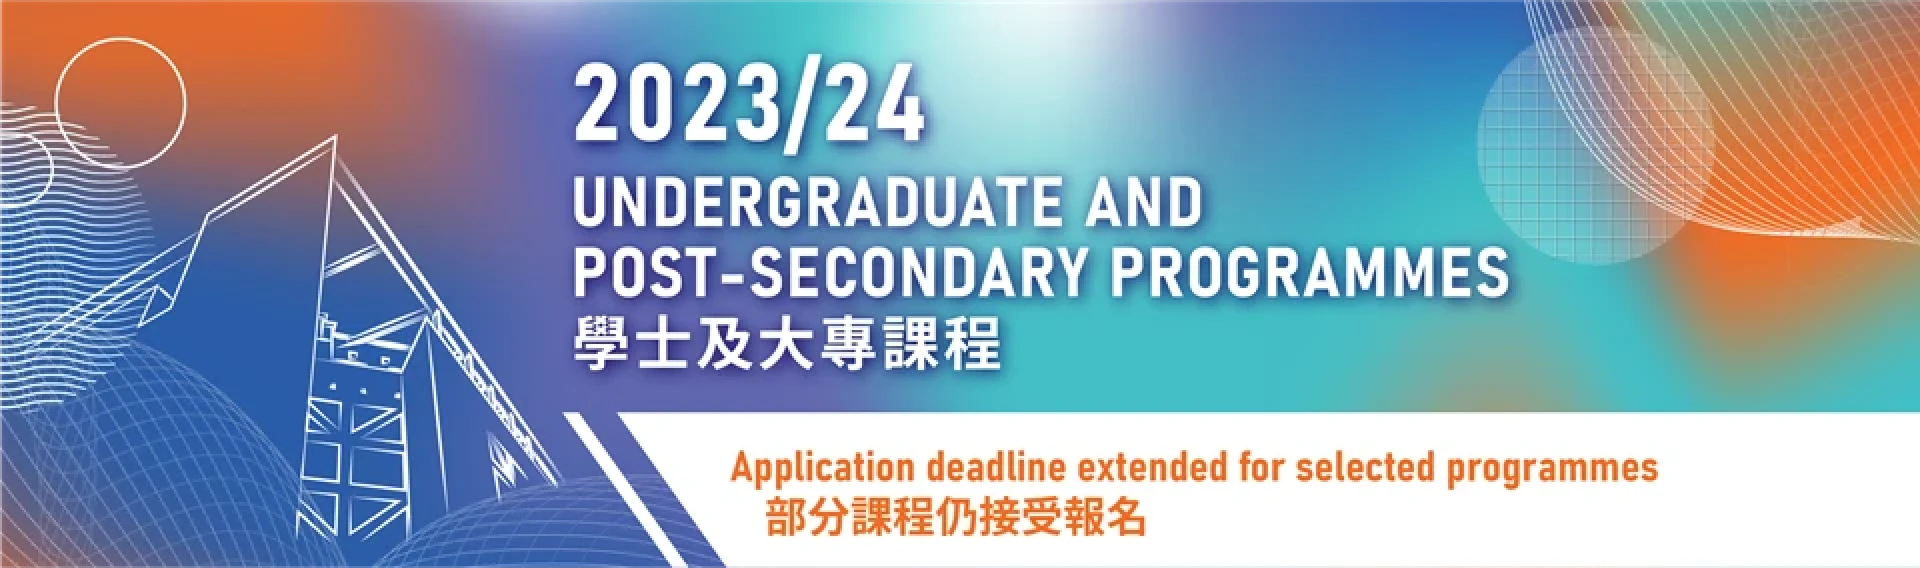 Application Deadline Extended for Selected Programmes